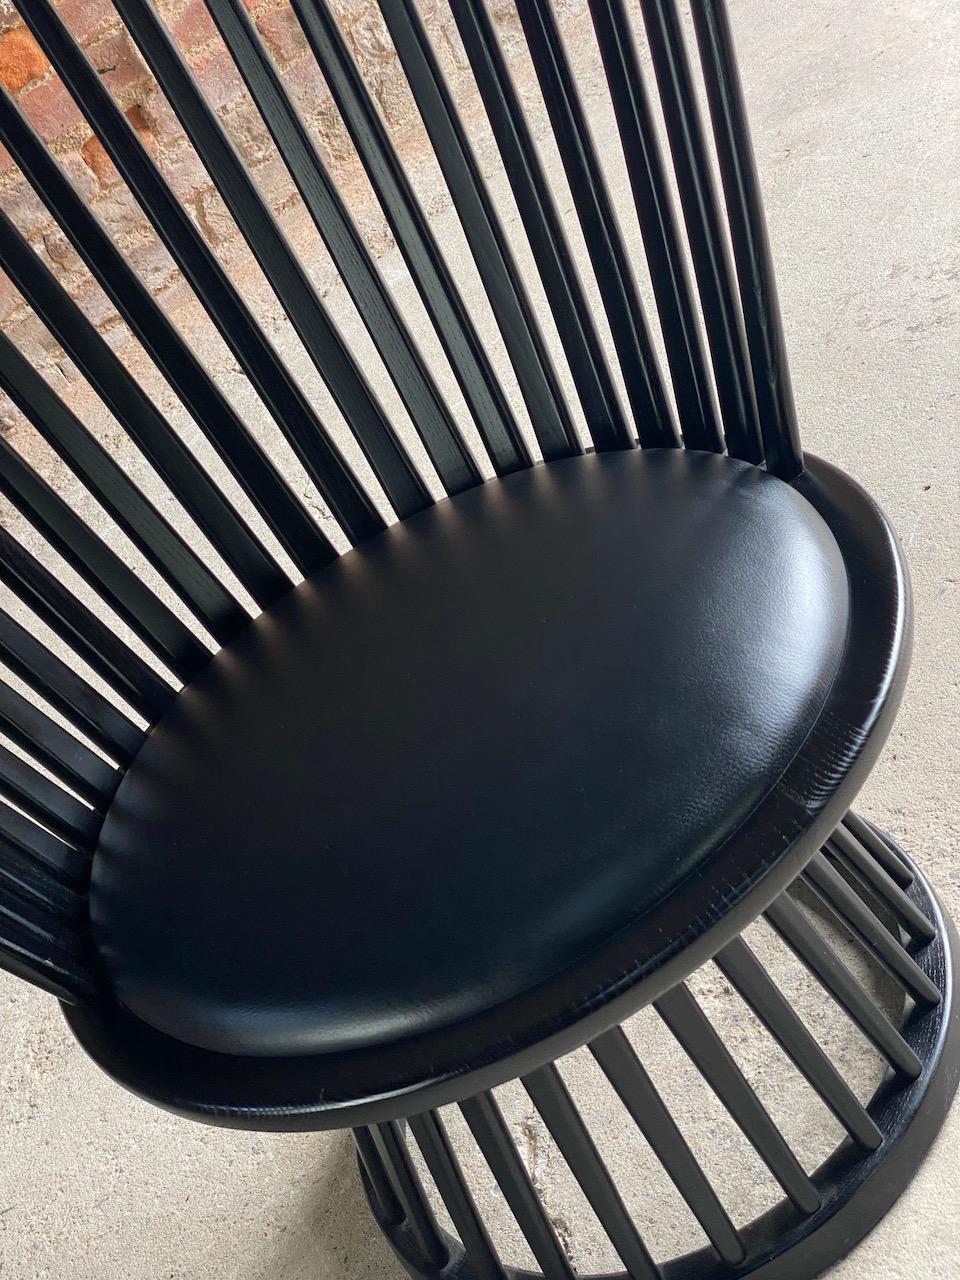 Tom Dixon Fan Chair in Black Ash & Leather 3